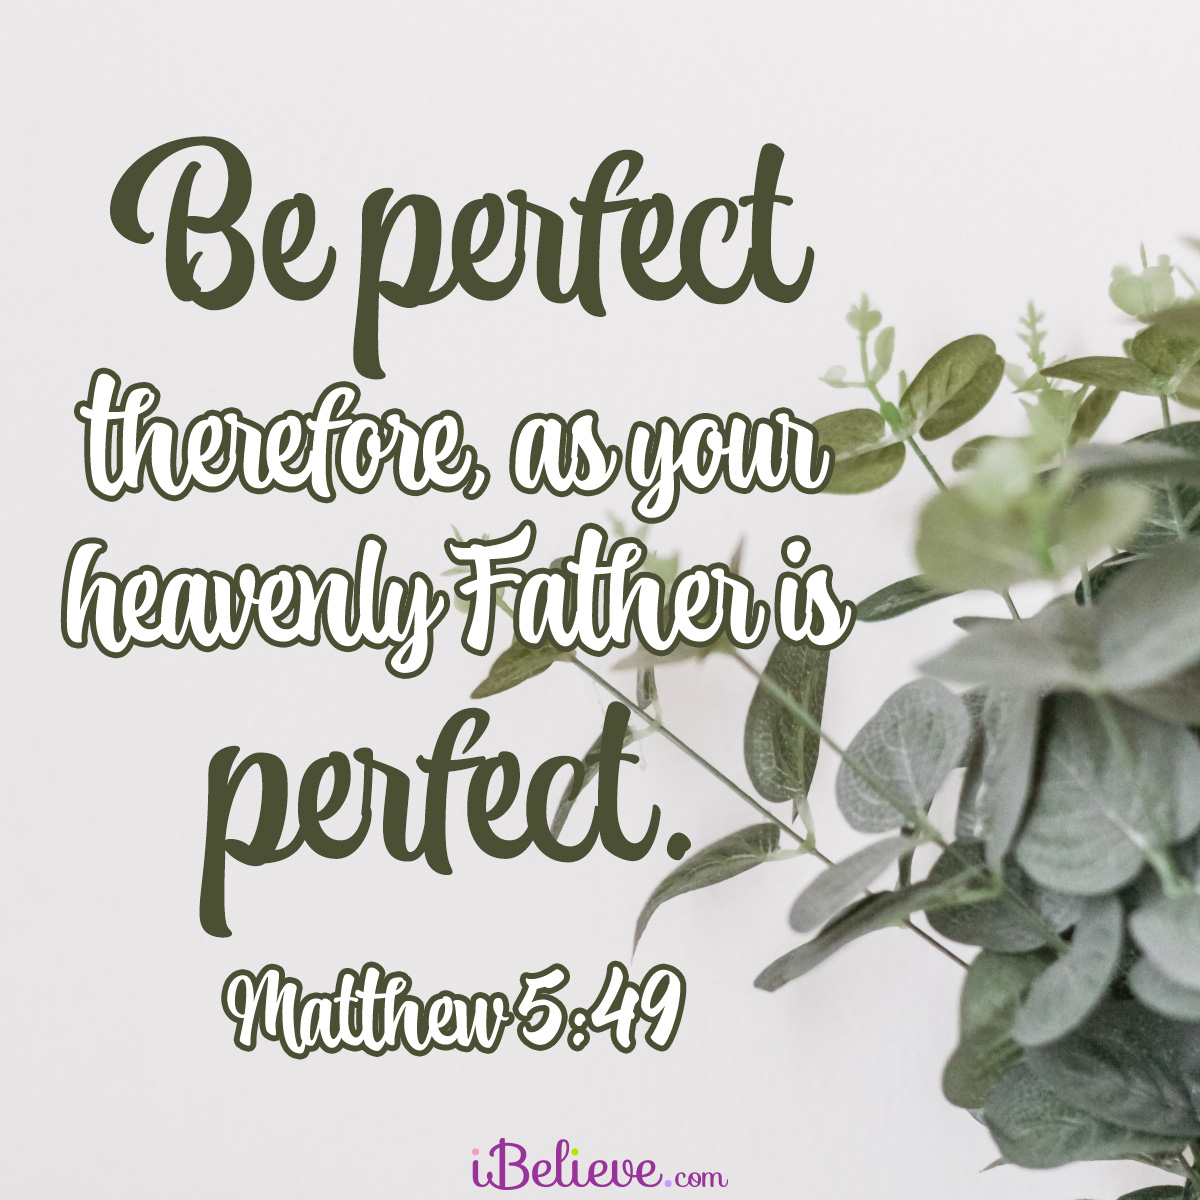 Matthew 5:49, inspirational image